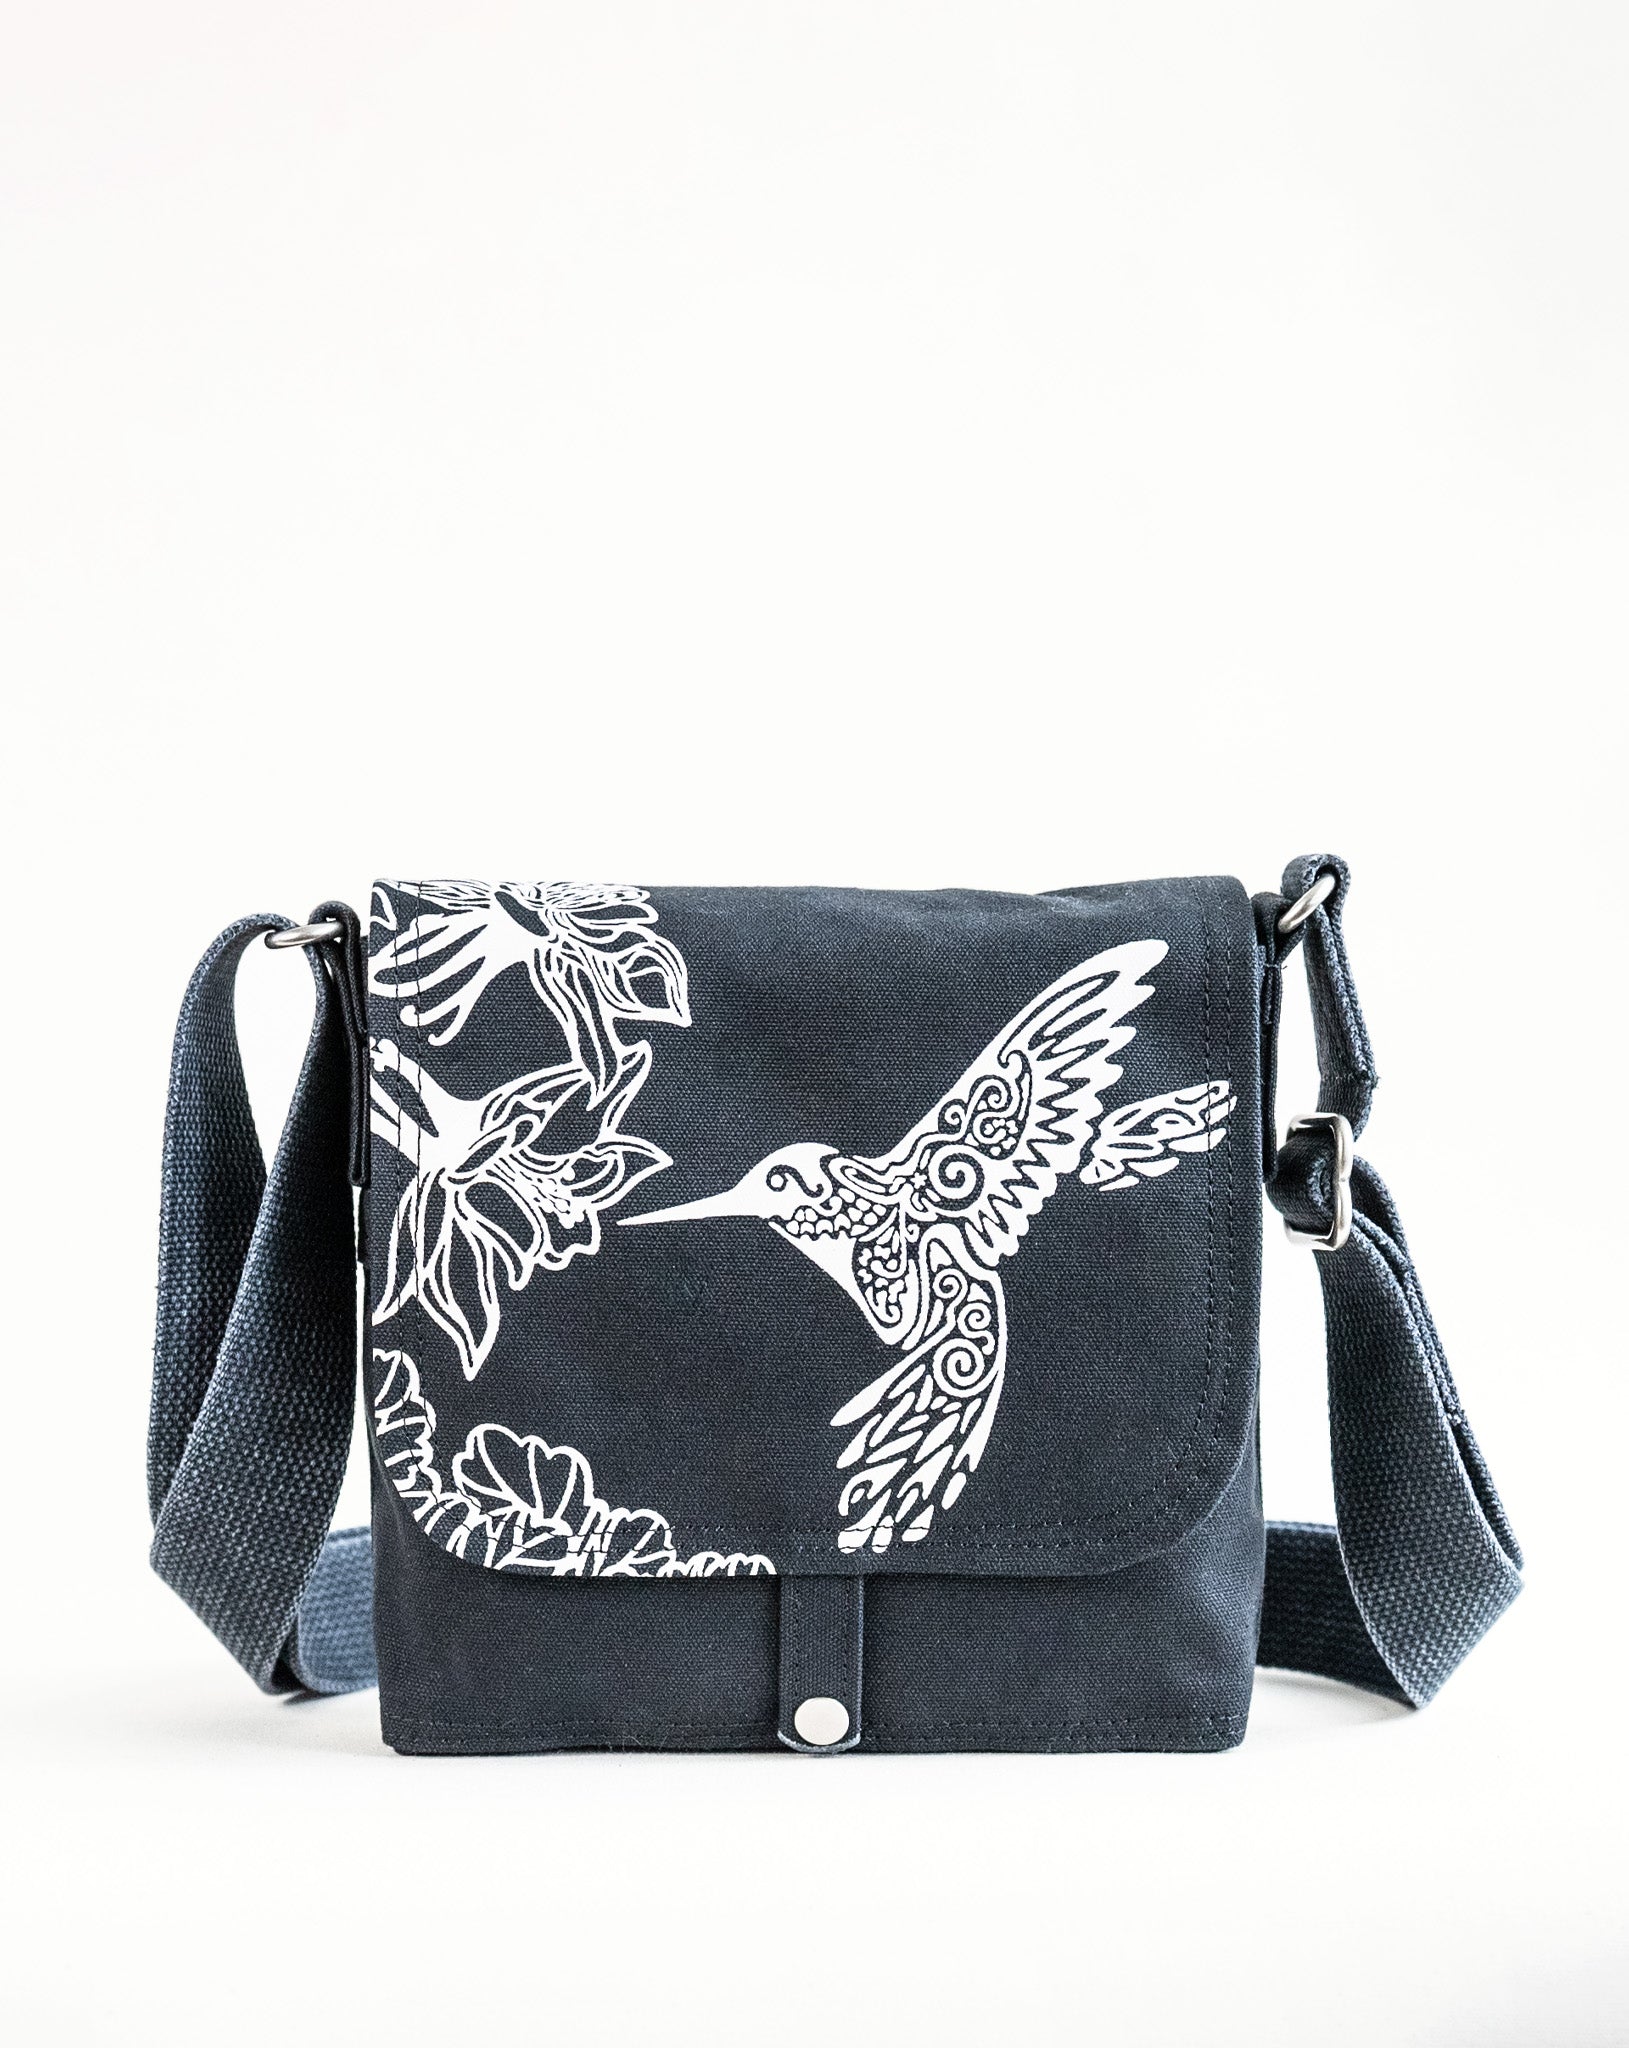 Front exterior of Dock 5’s Hummingbird Canvas Mini Messenger Bag in black featuring art from owner Natalija Walbridge